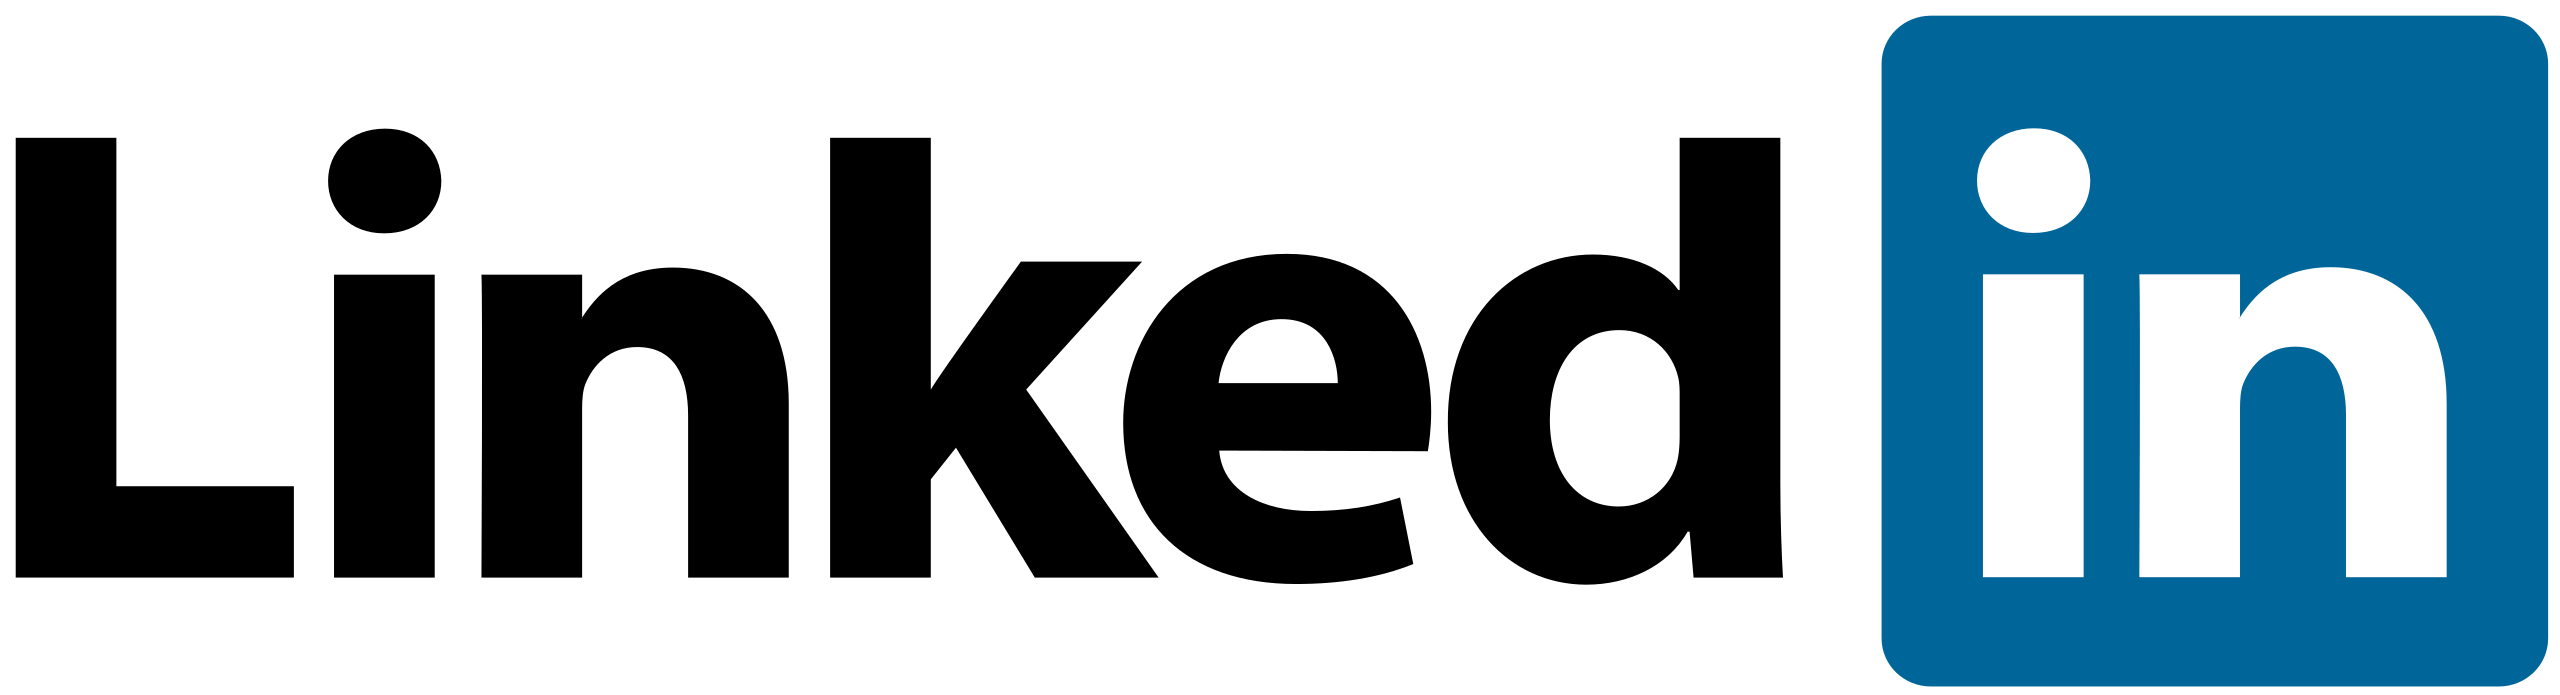 ESG Services - Linkedin logo